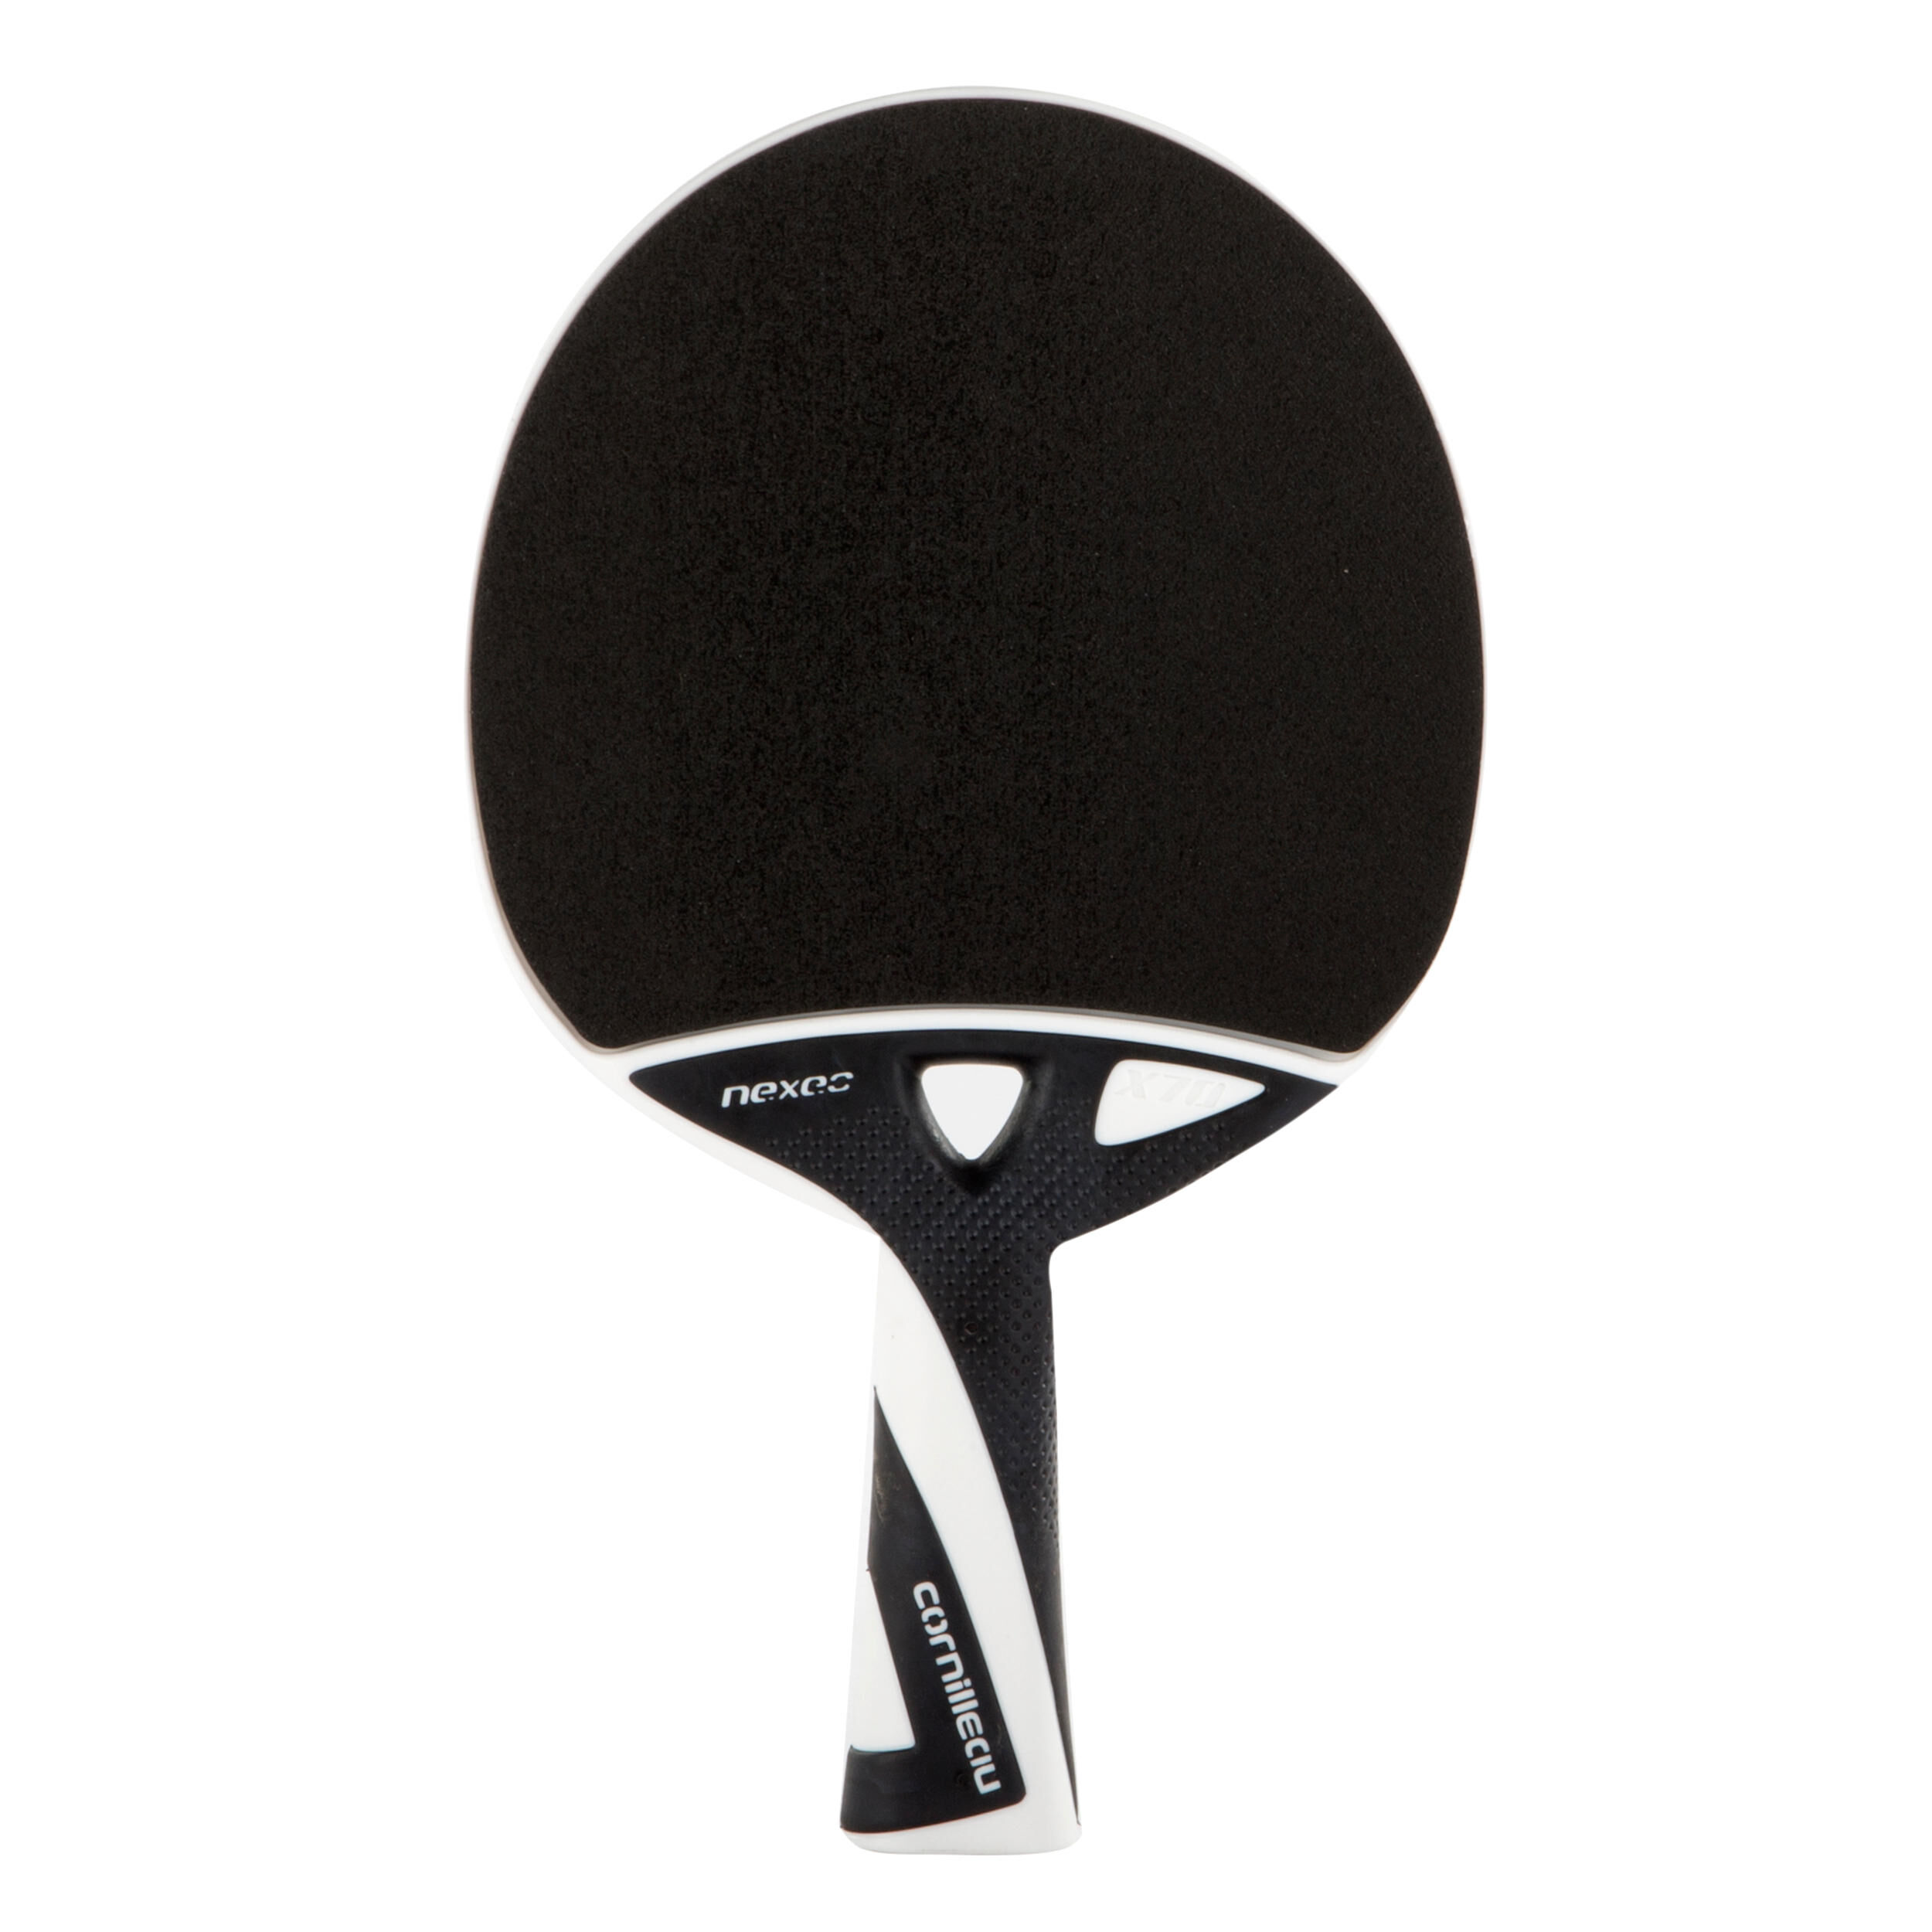 CORNILLEAU Nexeo X70 Outdoor Free Table Tennis Bat